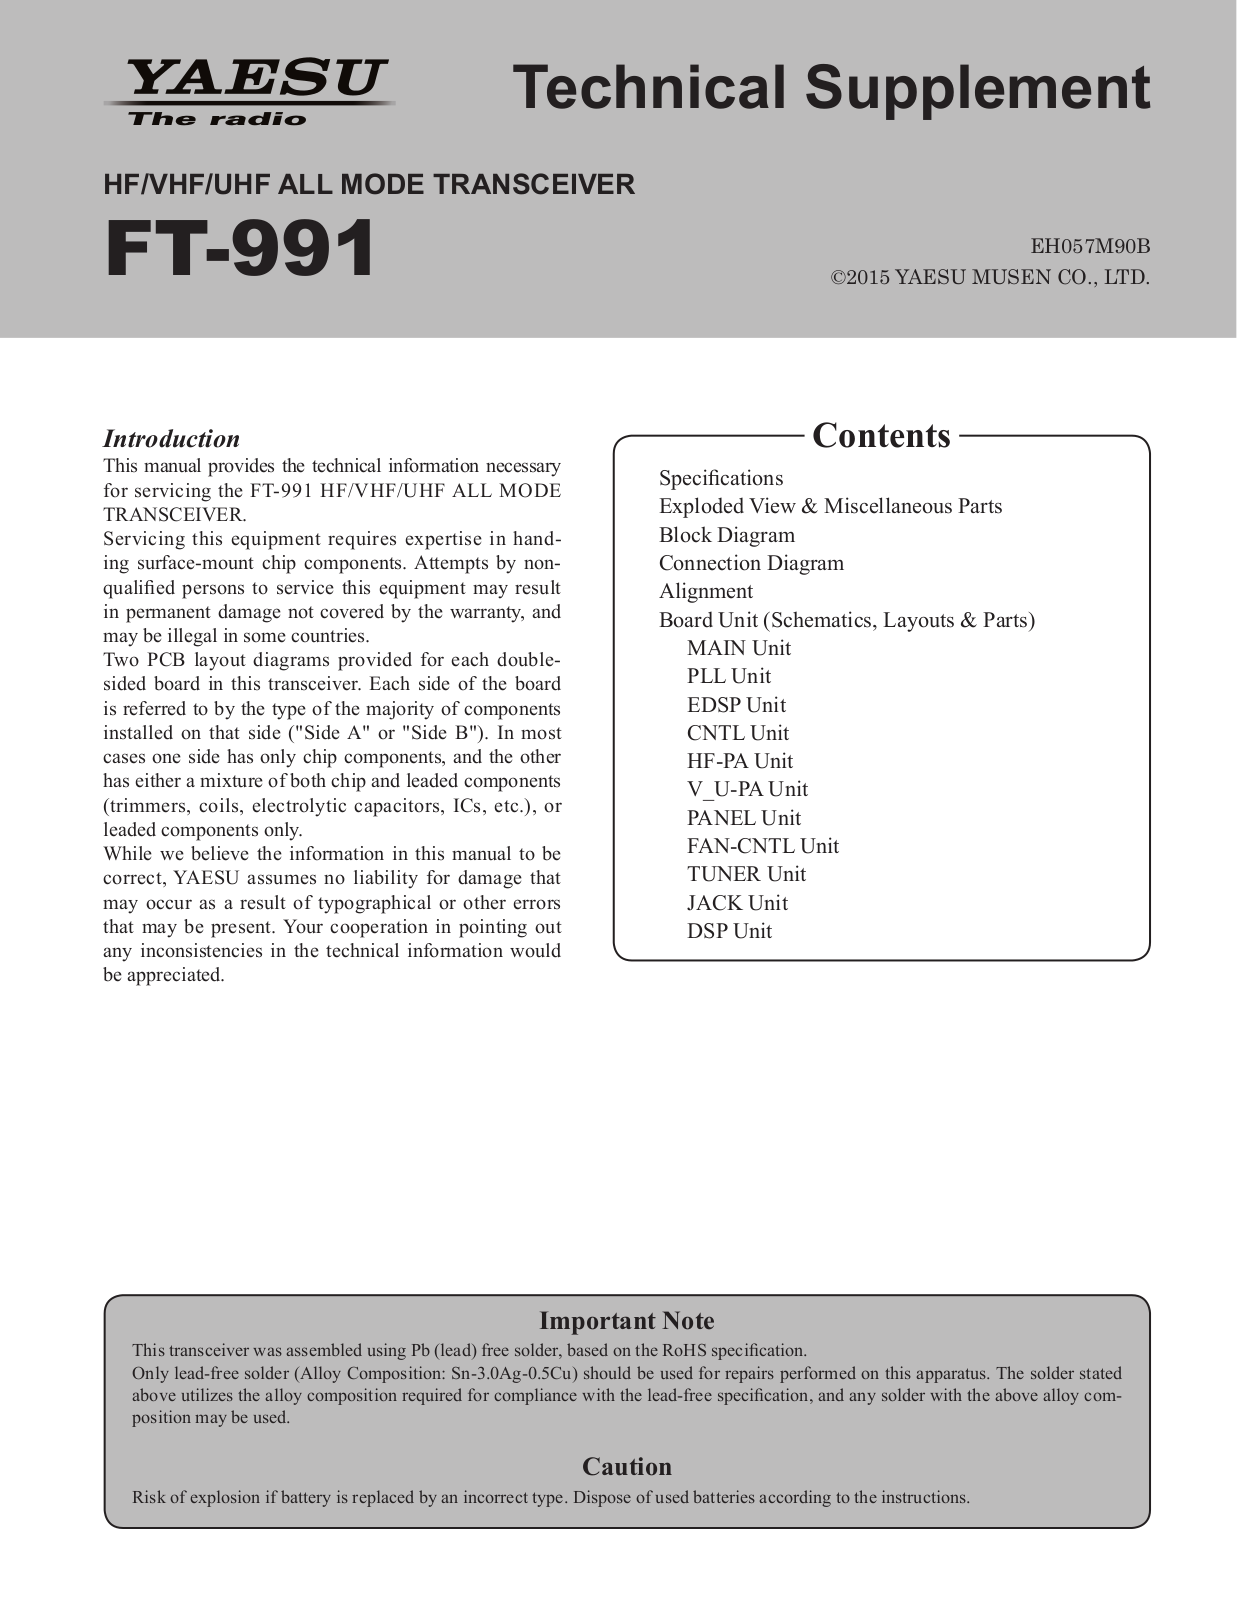 Yaesu FT-991 Service Manual